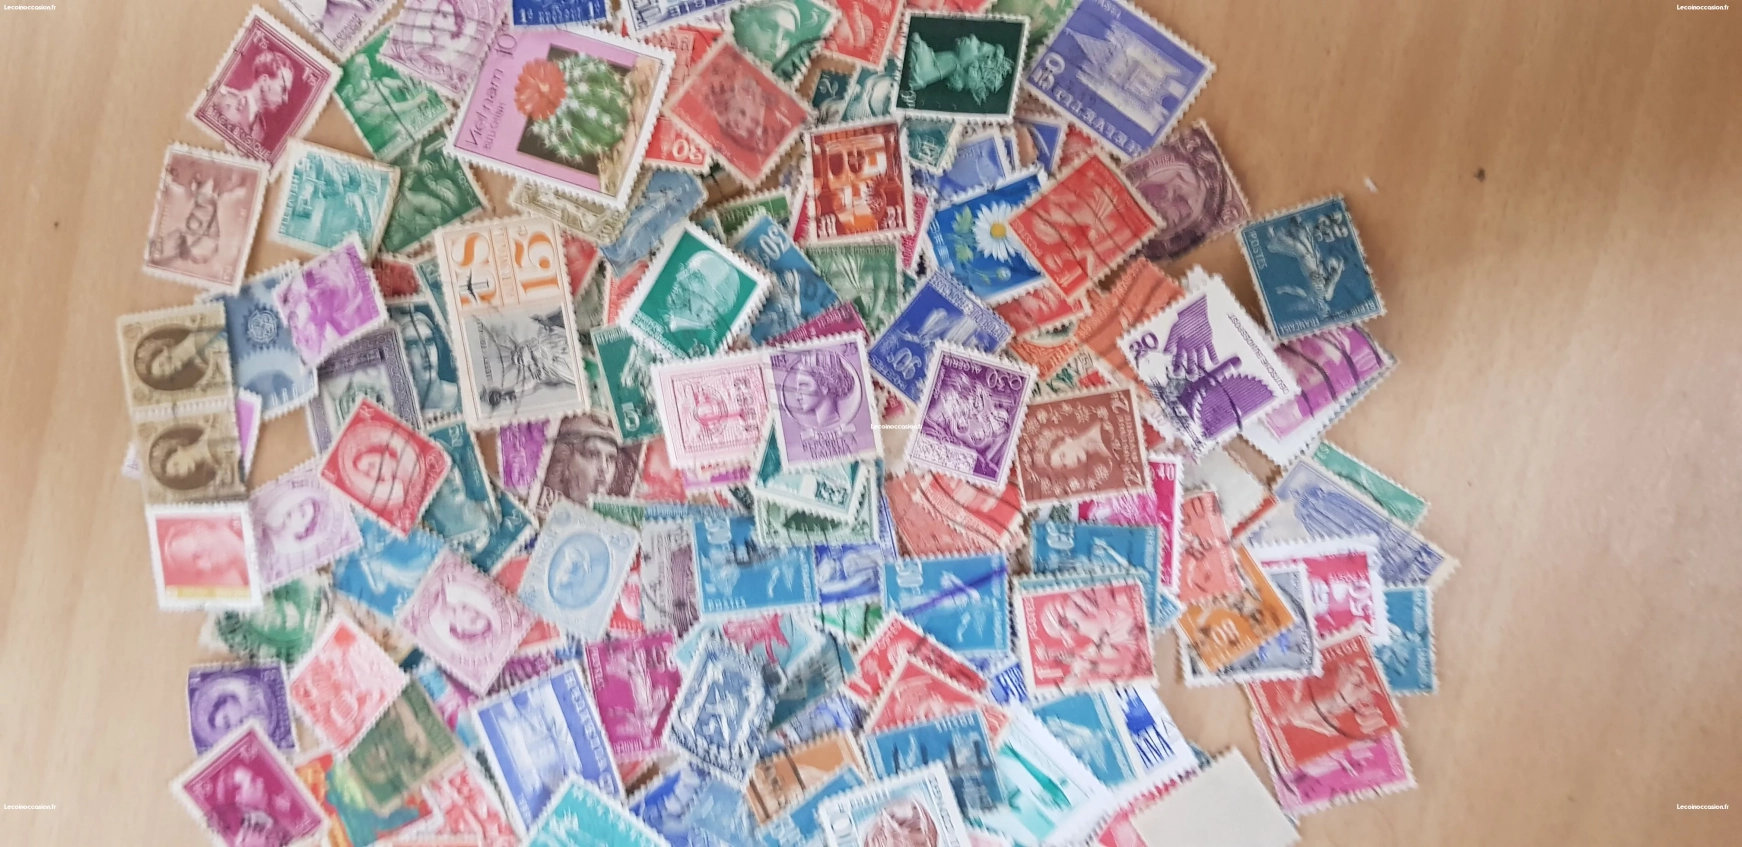 Vend lot de timbres obliterer